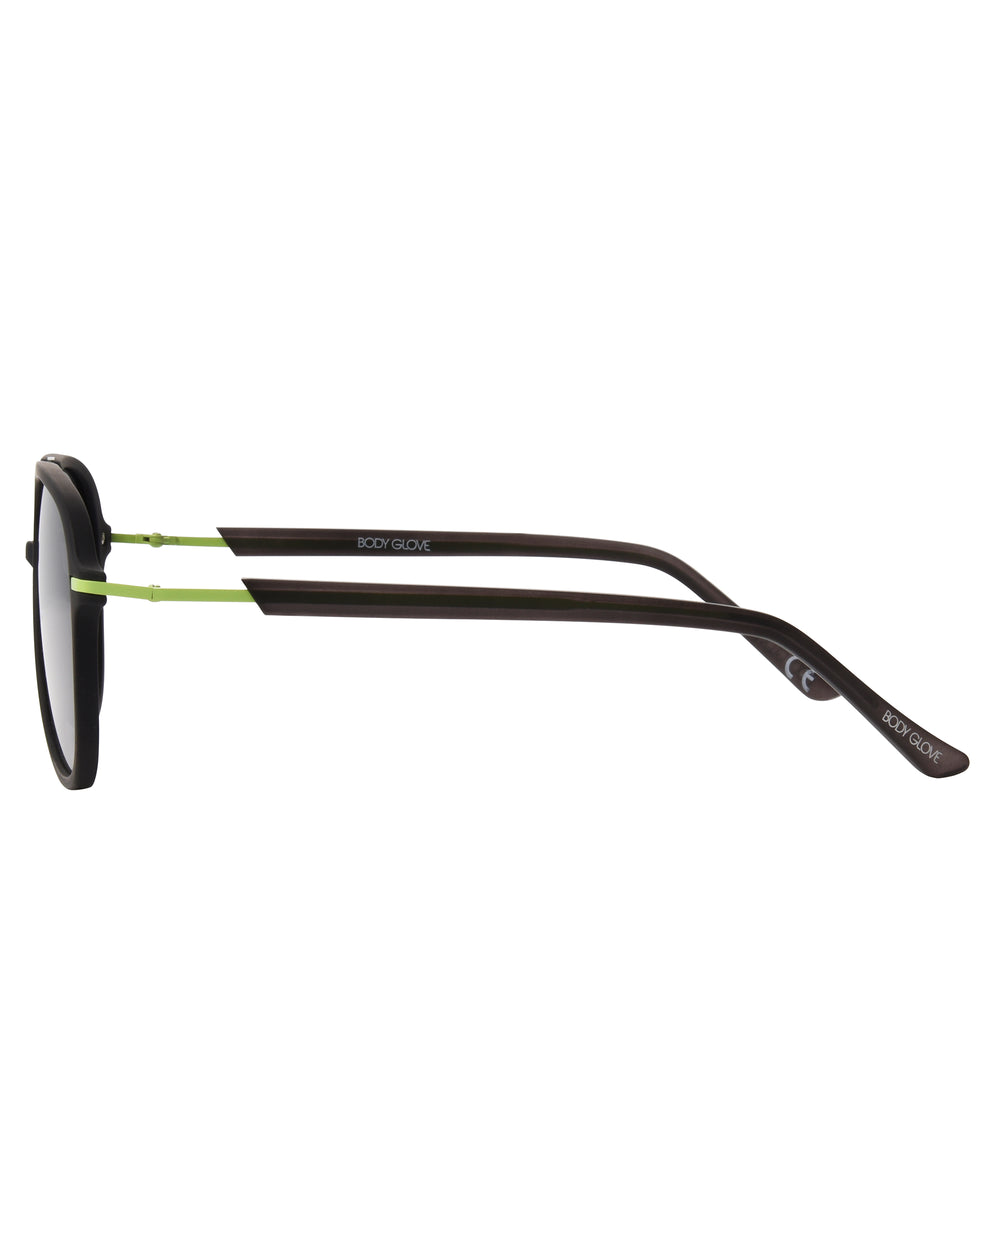 Backdoor Polarized Aviator Sunglasses - Black/Neon Citron - Body Glove